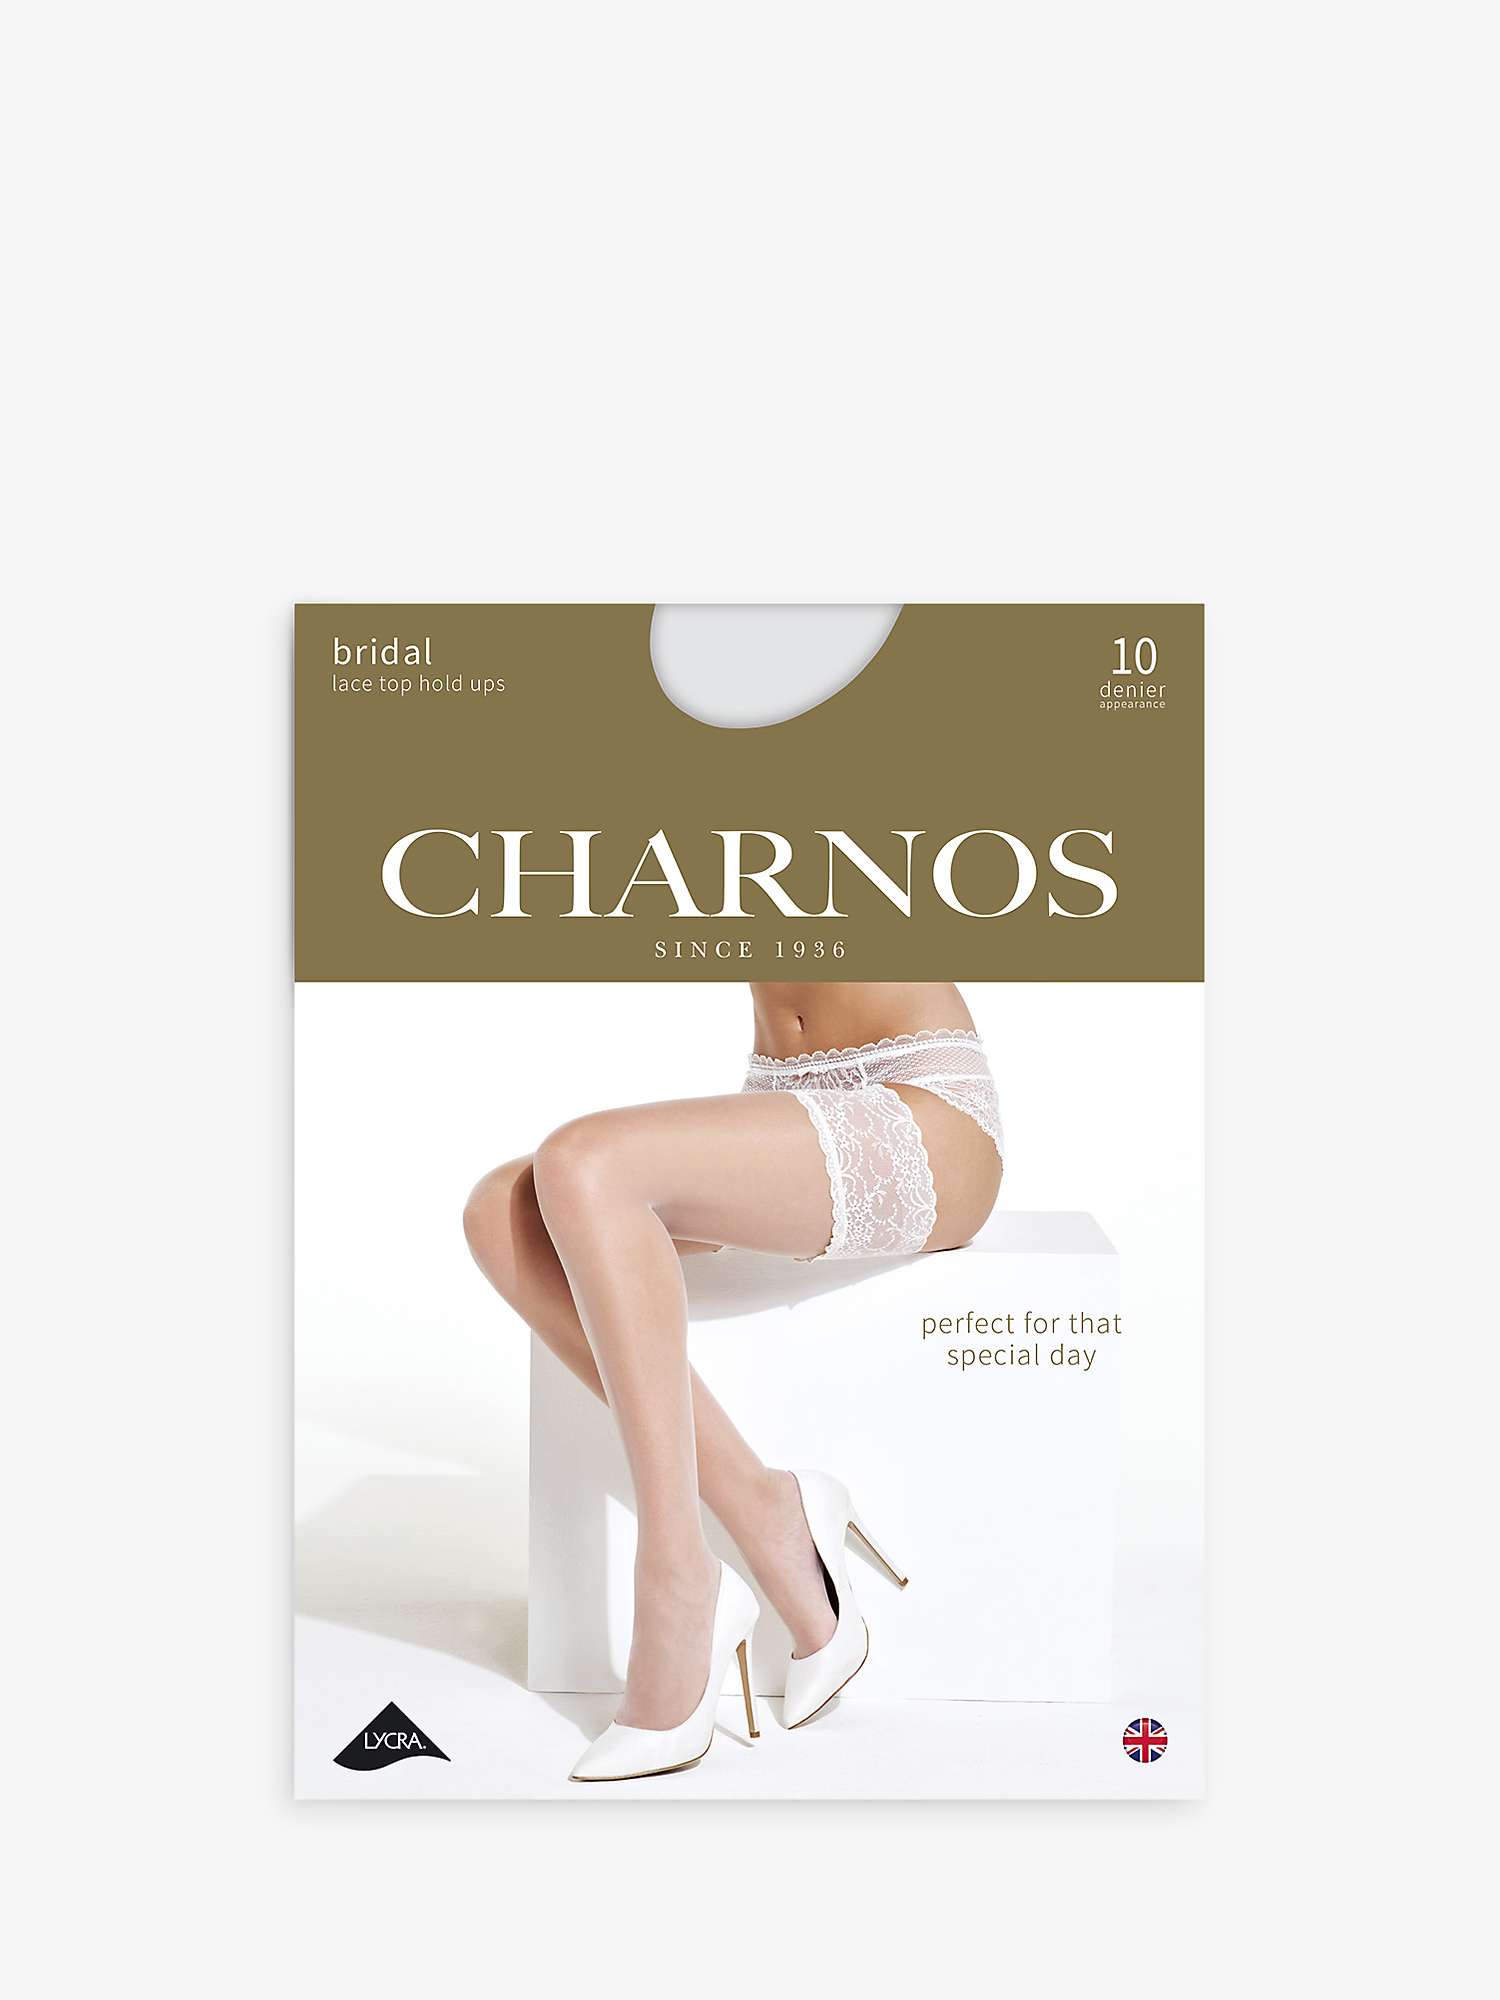 Buy Charnos 10 Denier Bridal Lace Hold-Ups Online at johnlewis.com